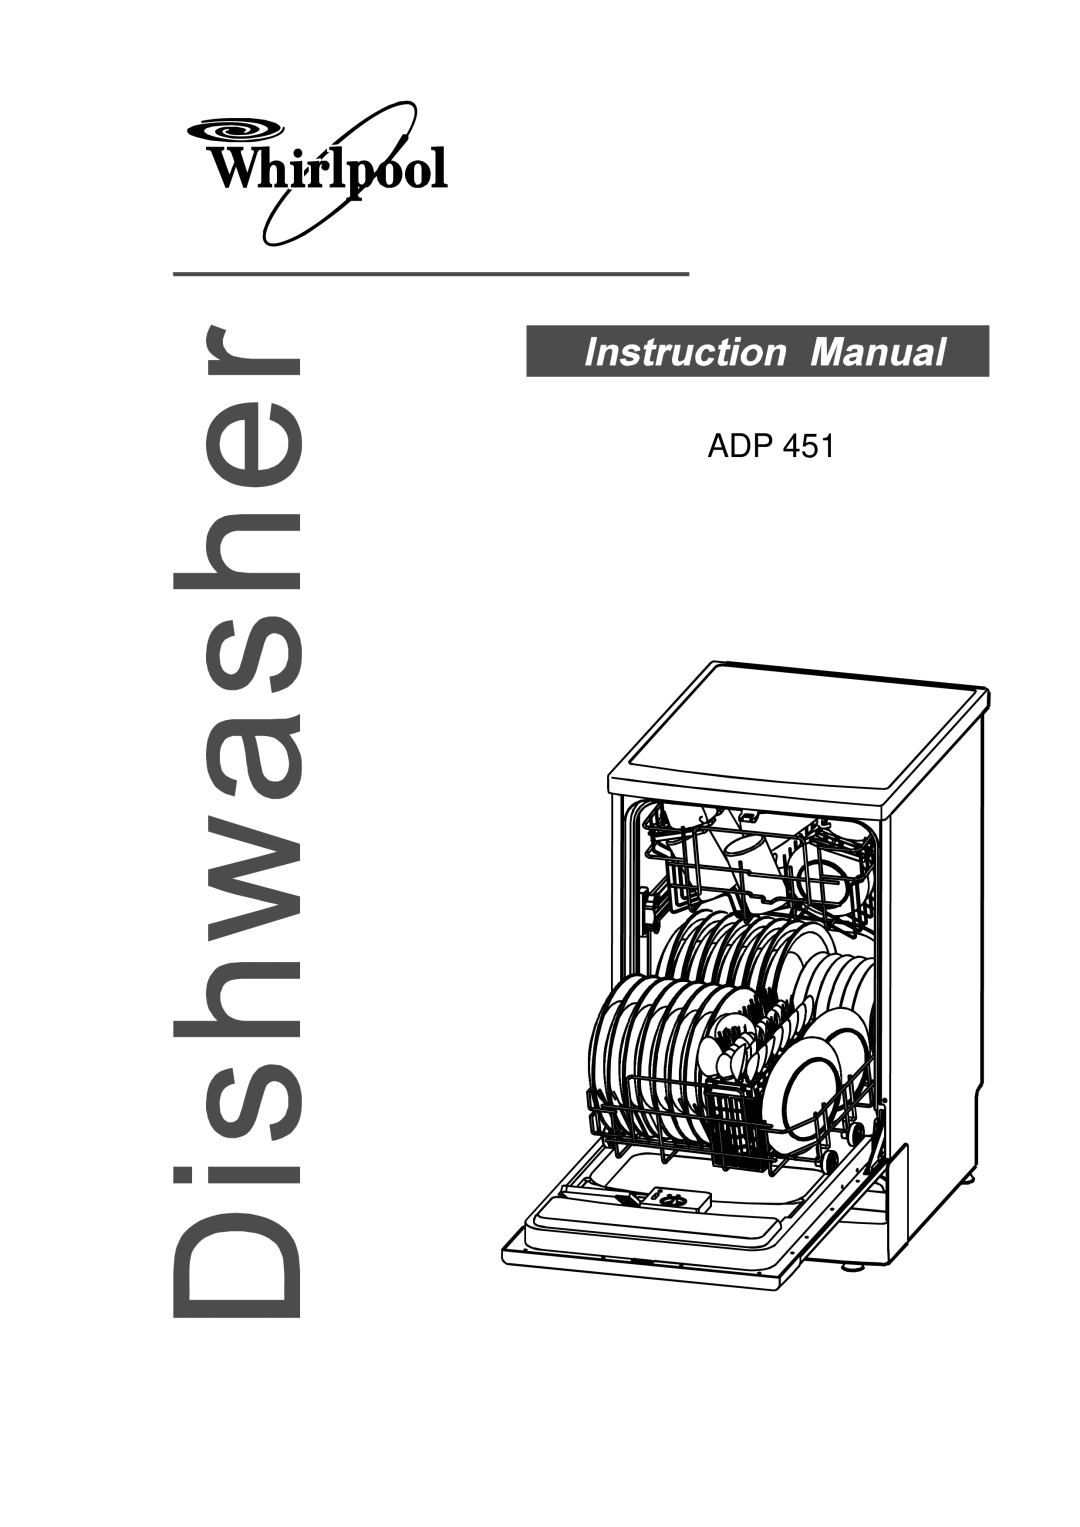 Whirlpool ADP 451 manual 